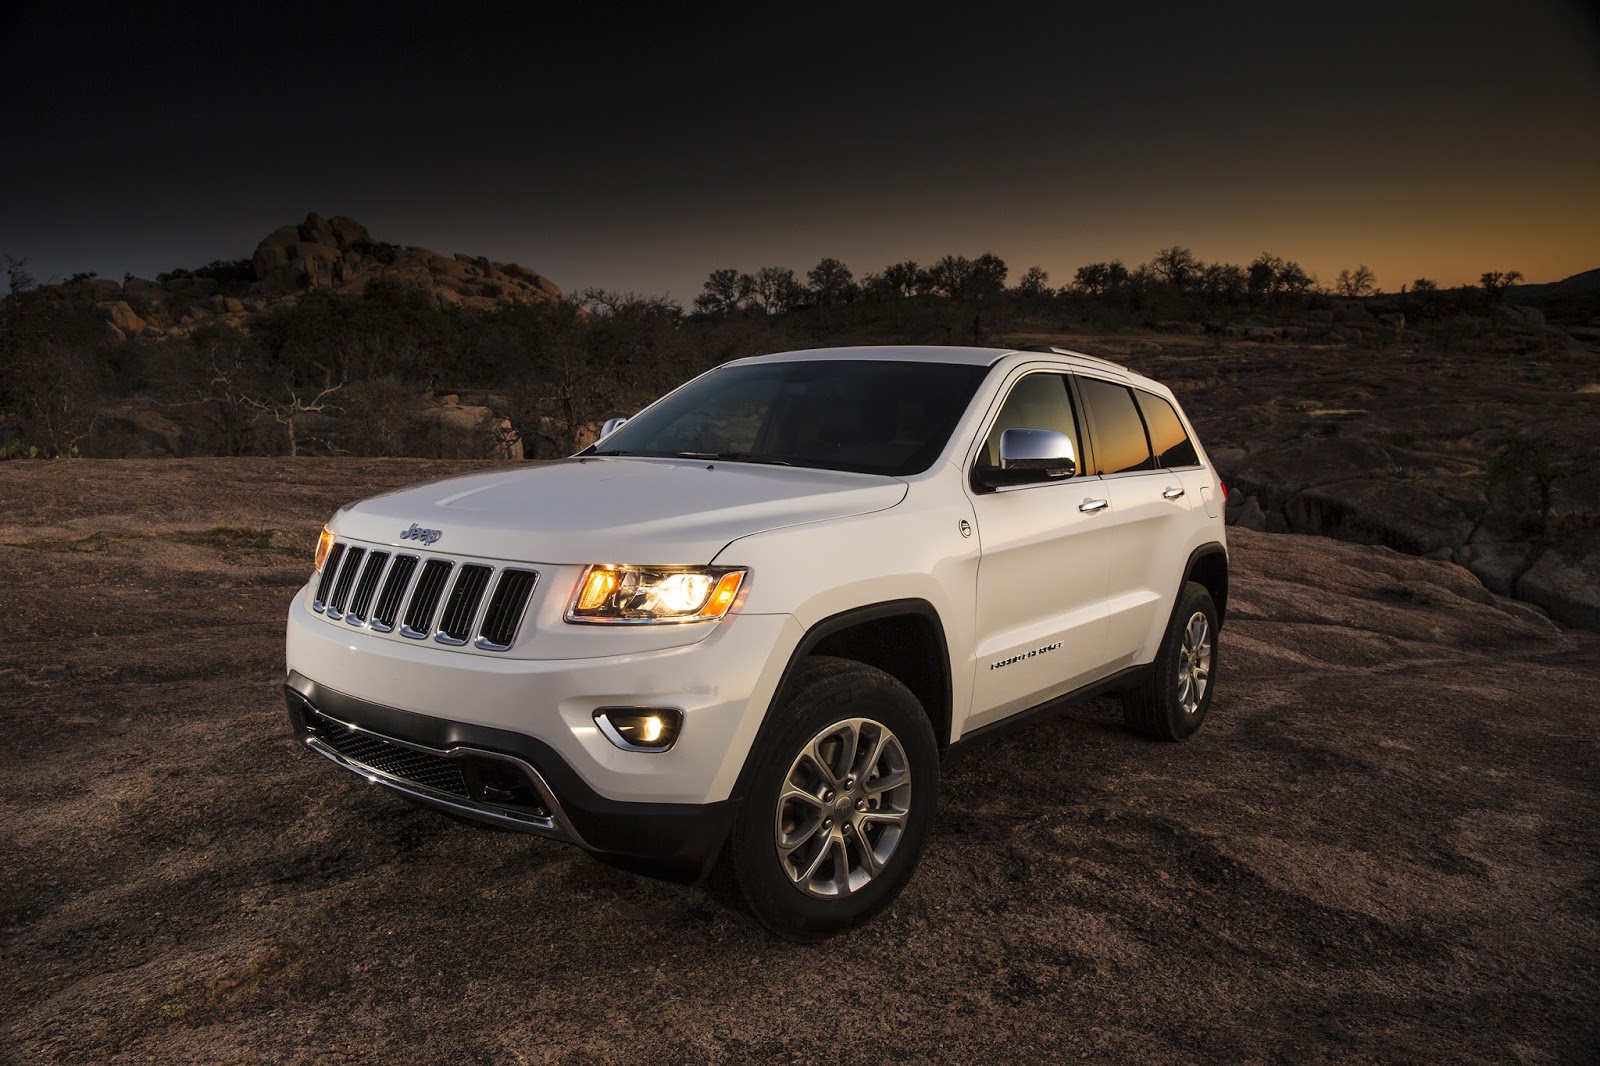 New Car Review: 2014 Jeep Grand Cherokee Laredo 4X2